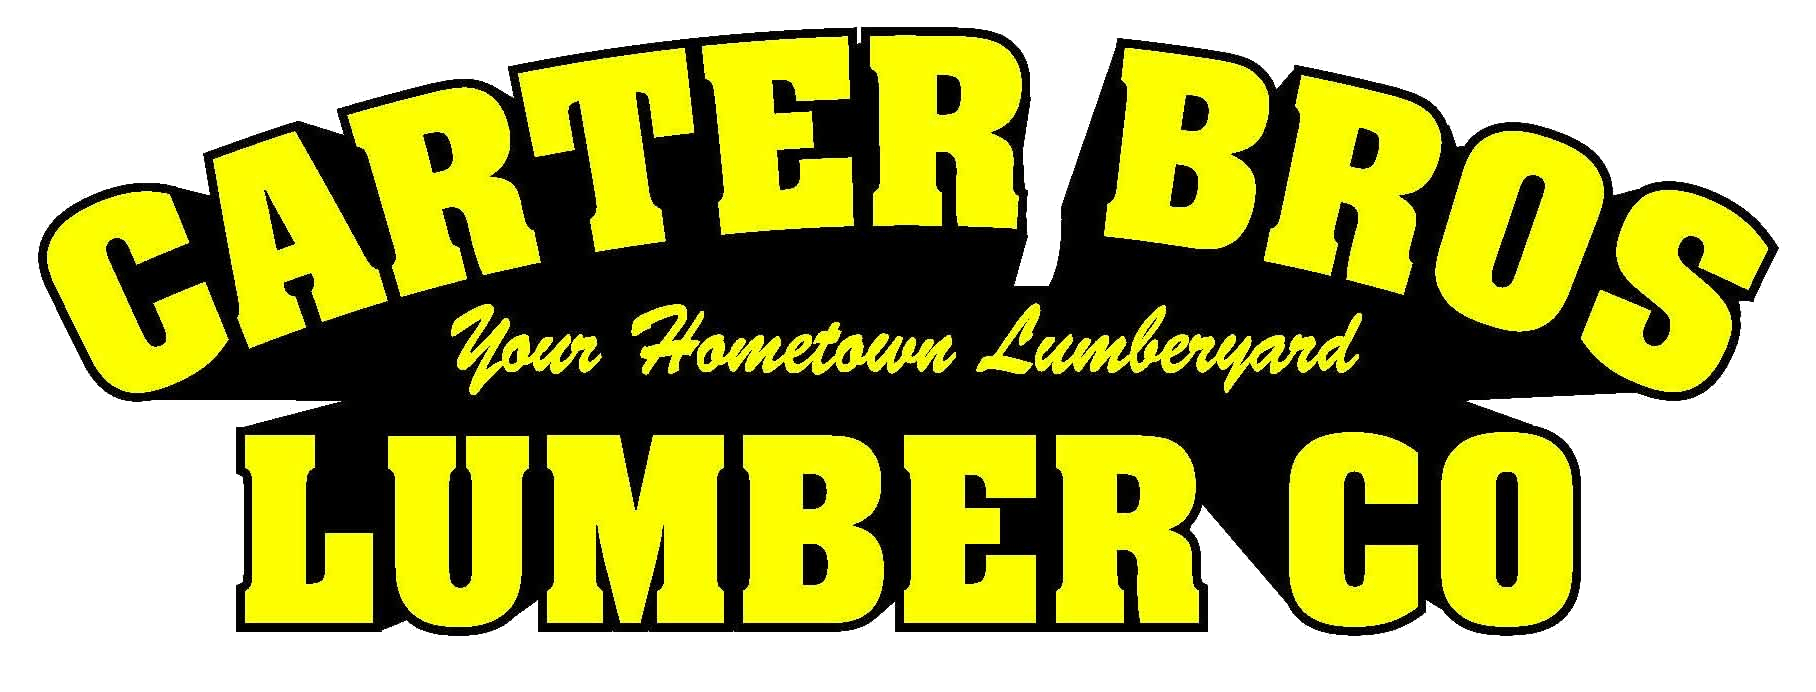 Carter Bros Lumber Co